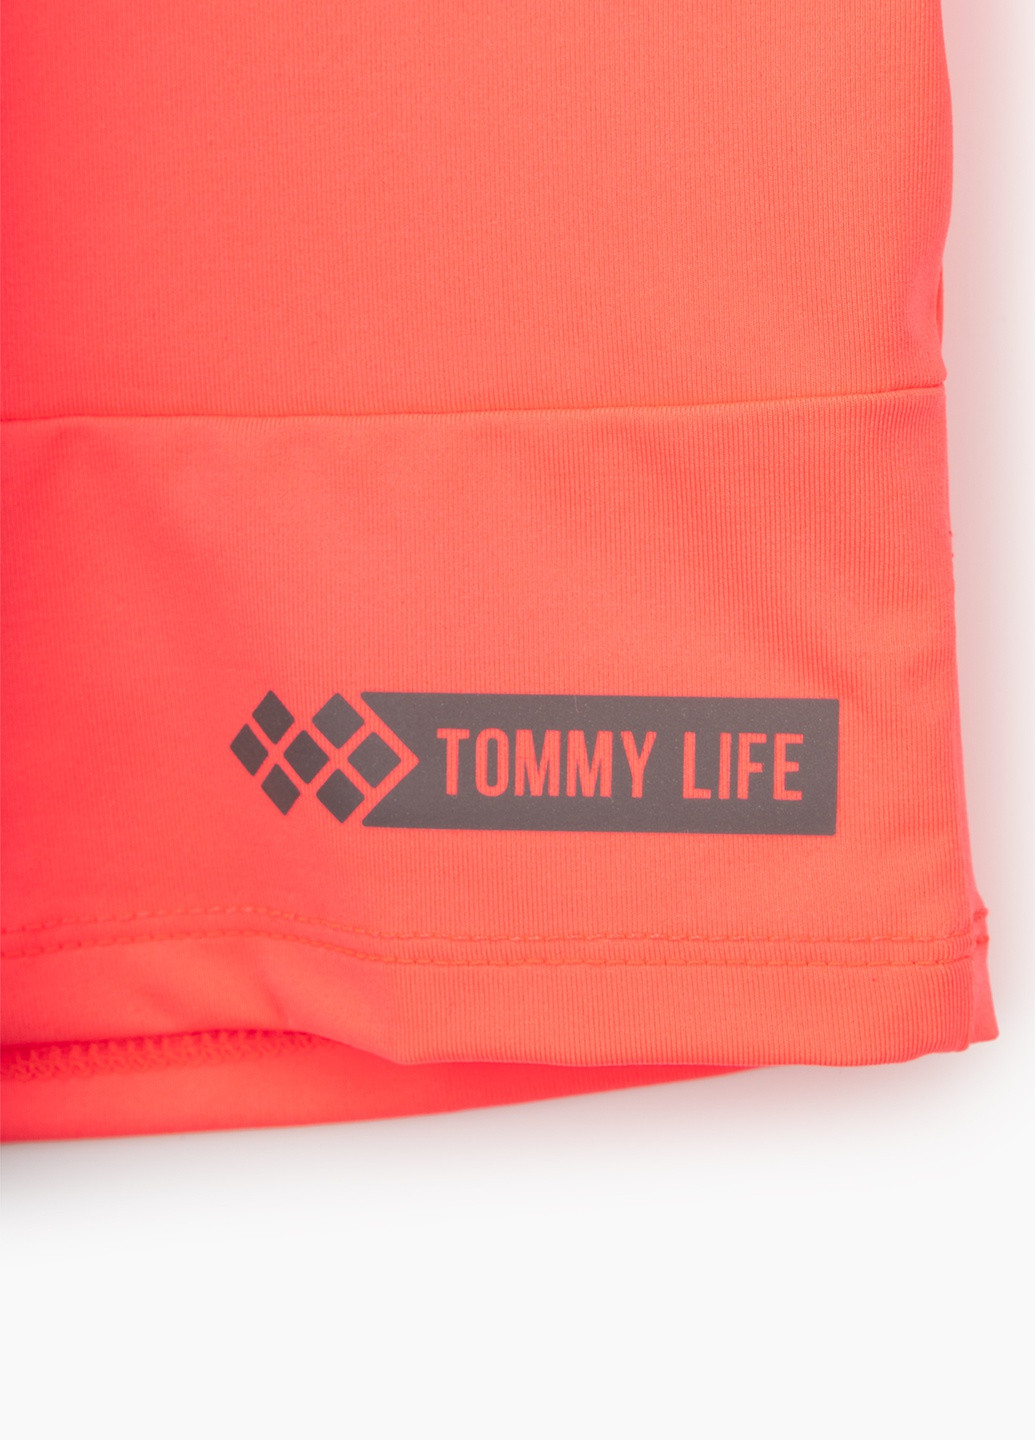 Розовая всесезон футболка фитнес Tommy Life